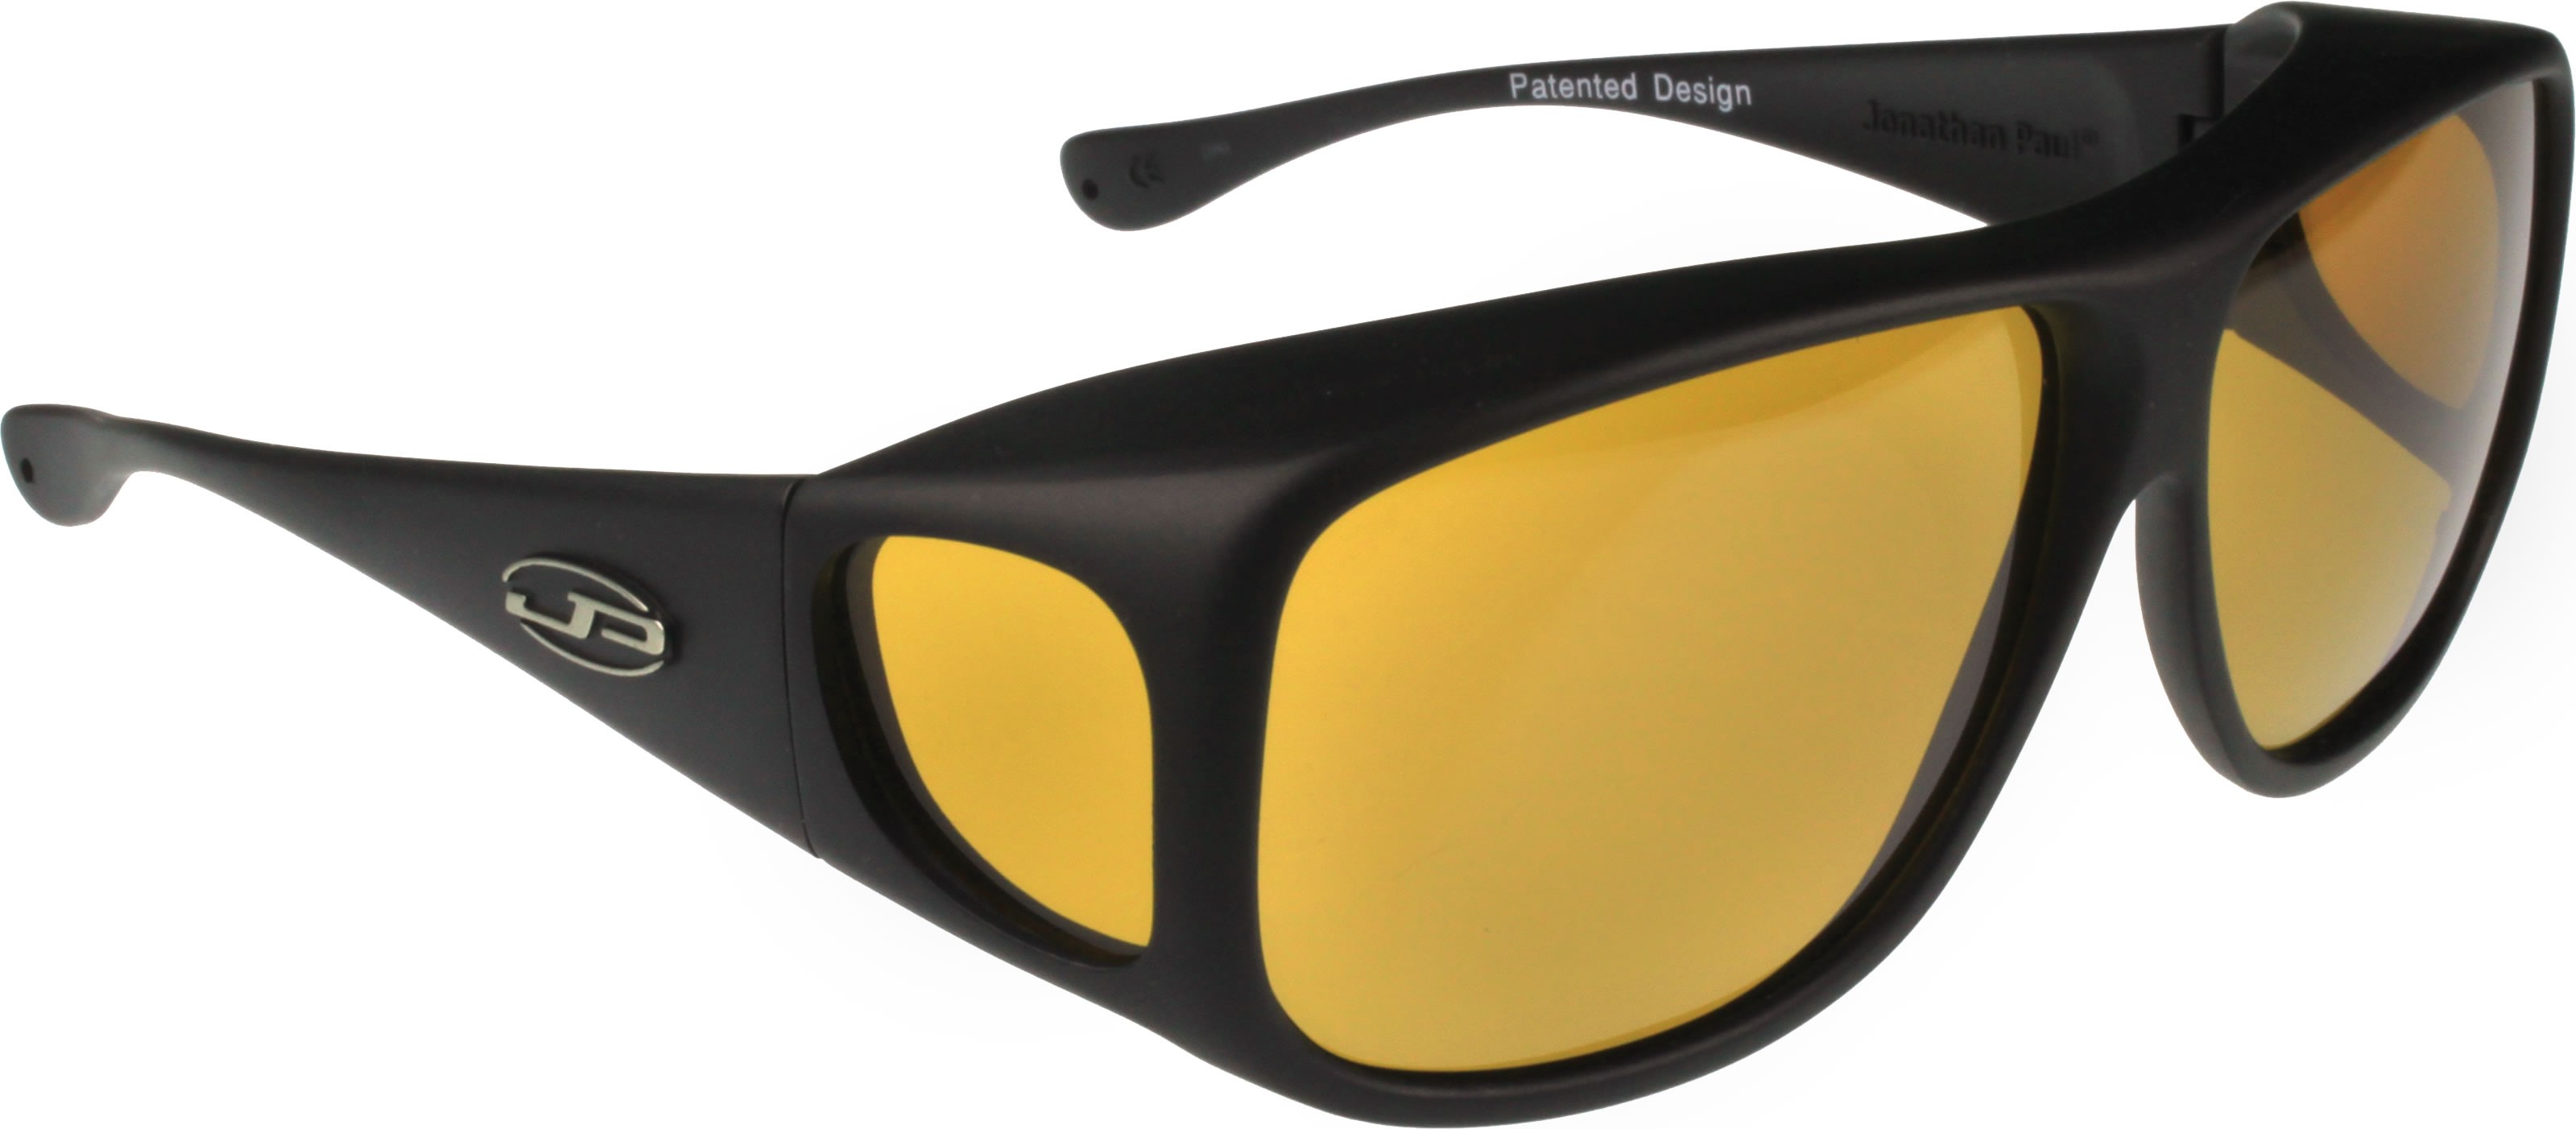 Fitovers Eyewear - Aviator Collection - Black/polarized Yellow - image 1 of 4